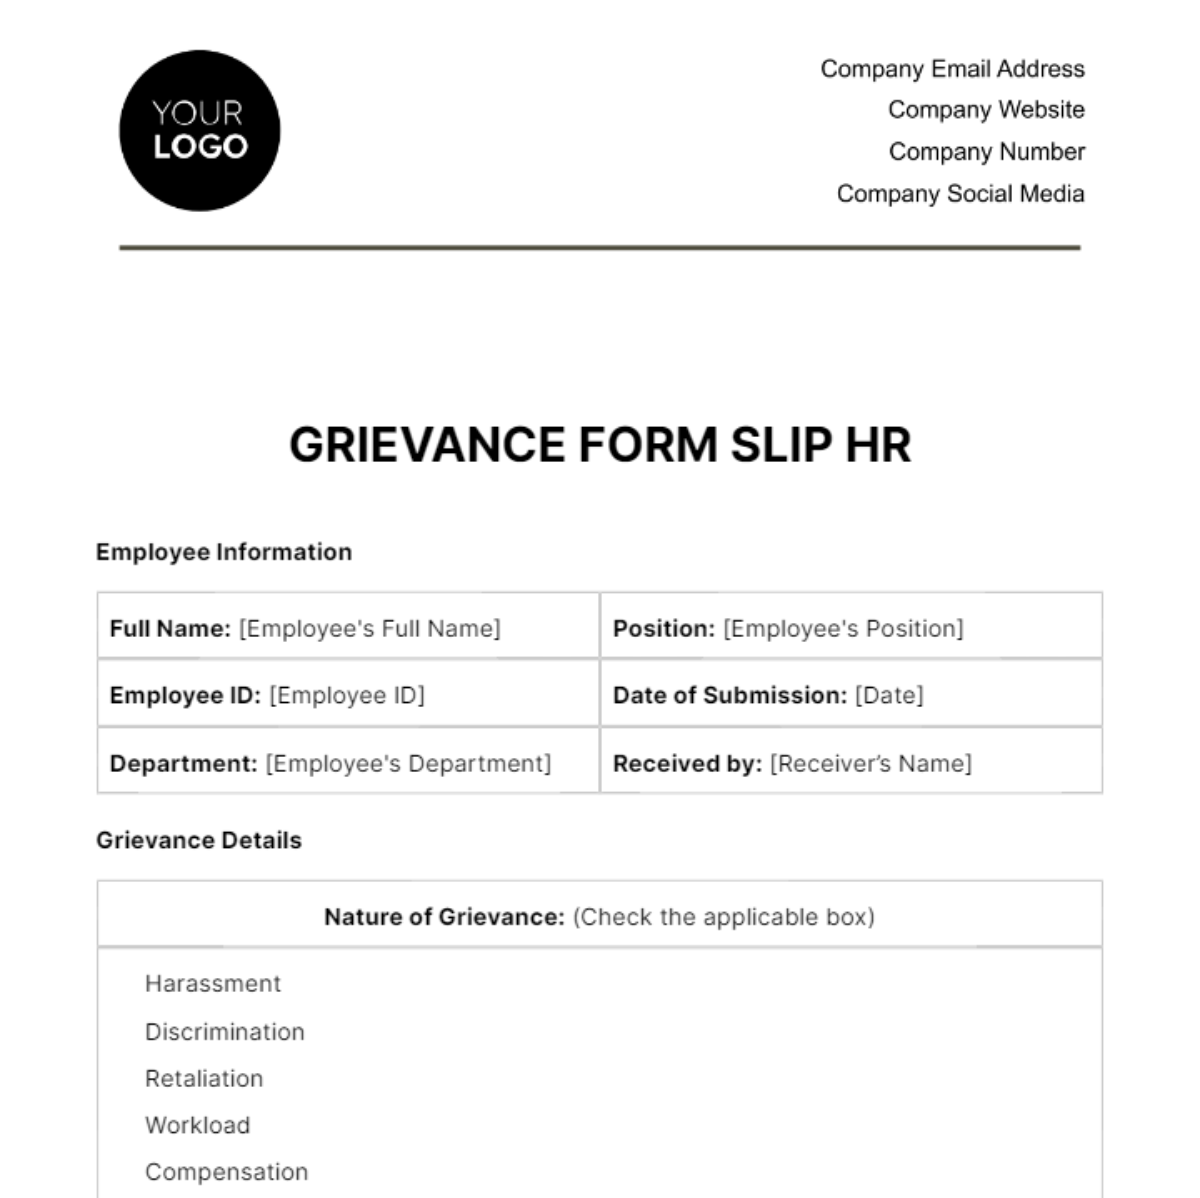 Grievance Form Slip HR Template